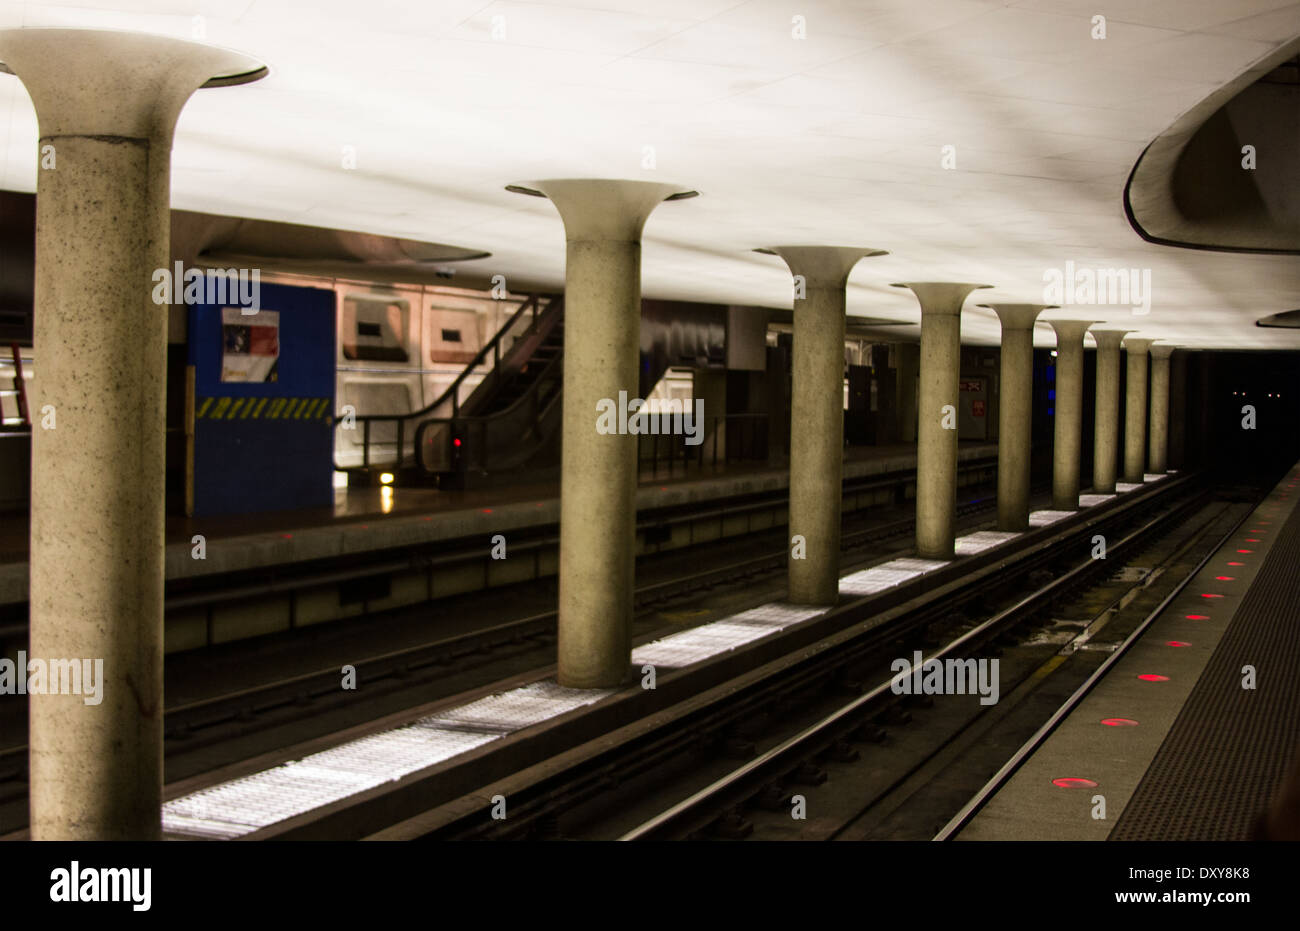 Pentagon City Metro Station Underground Rails In Washington Dc DXY8K8 